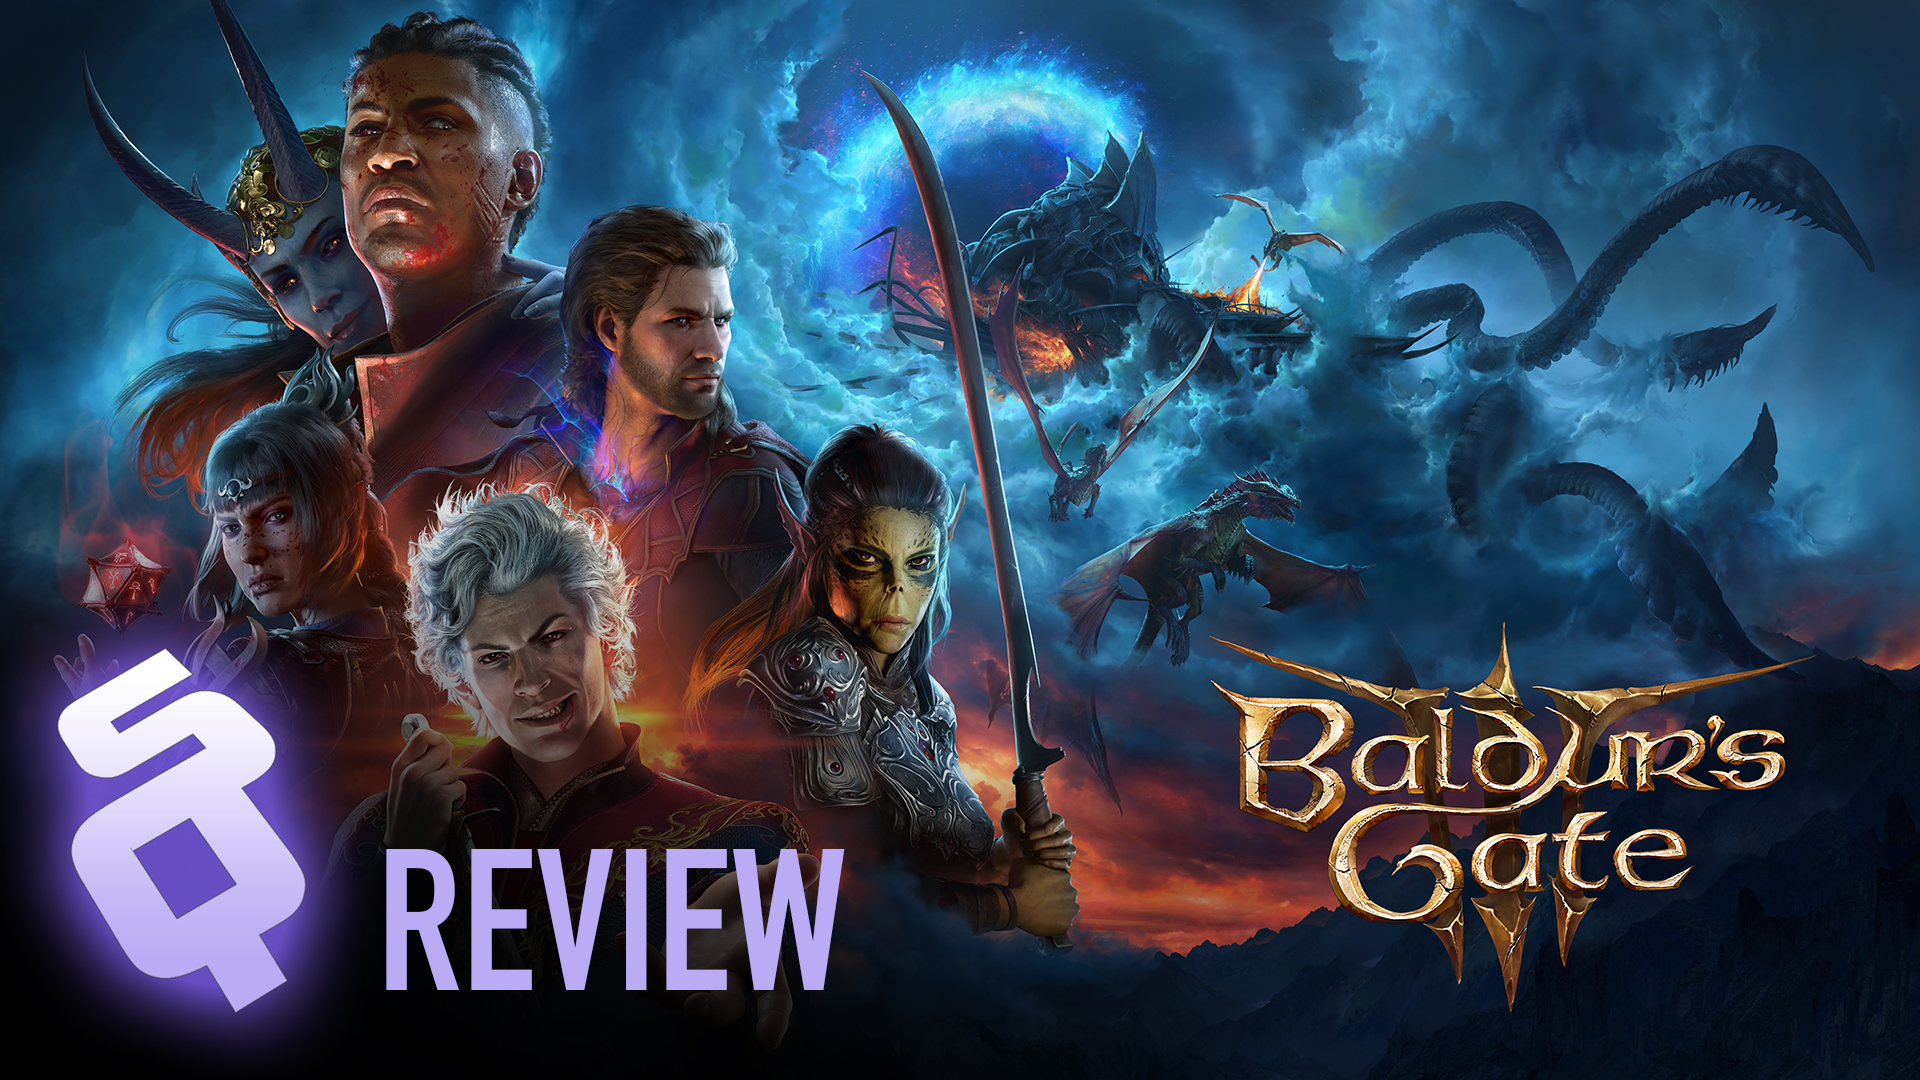 Baldur’s Gate III Review